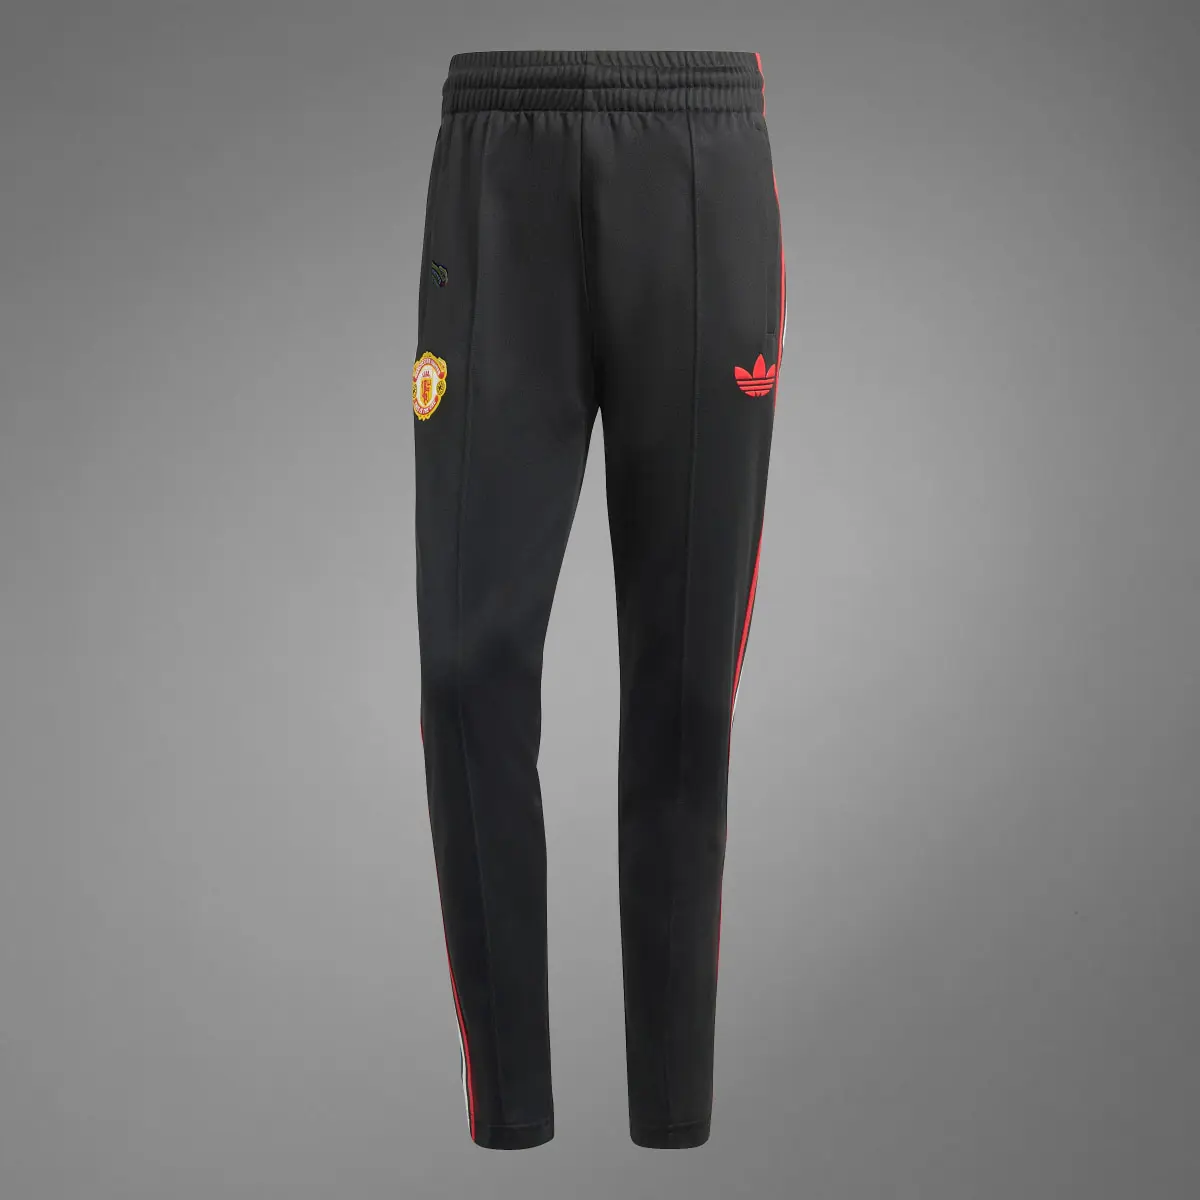 Adidas Pants Manchester United Stone Roses Originals. 3